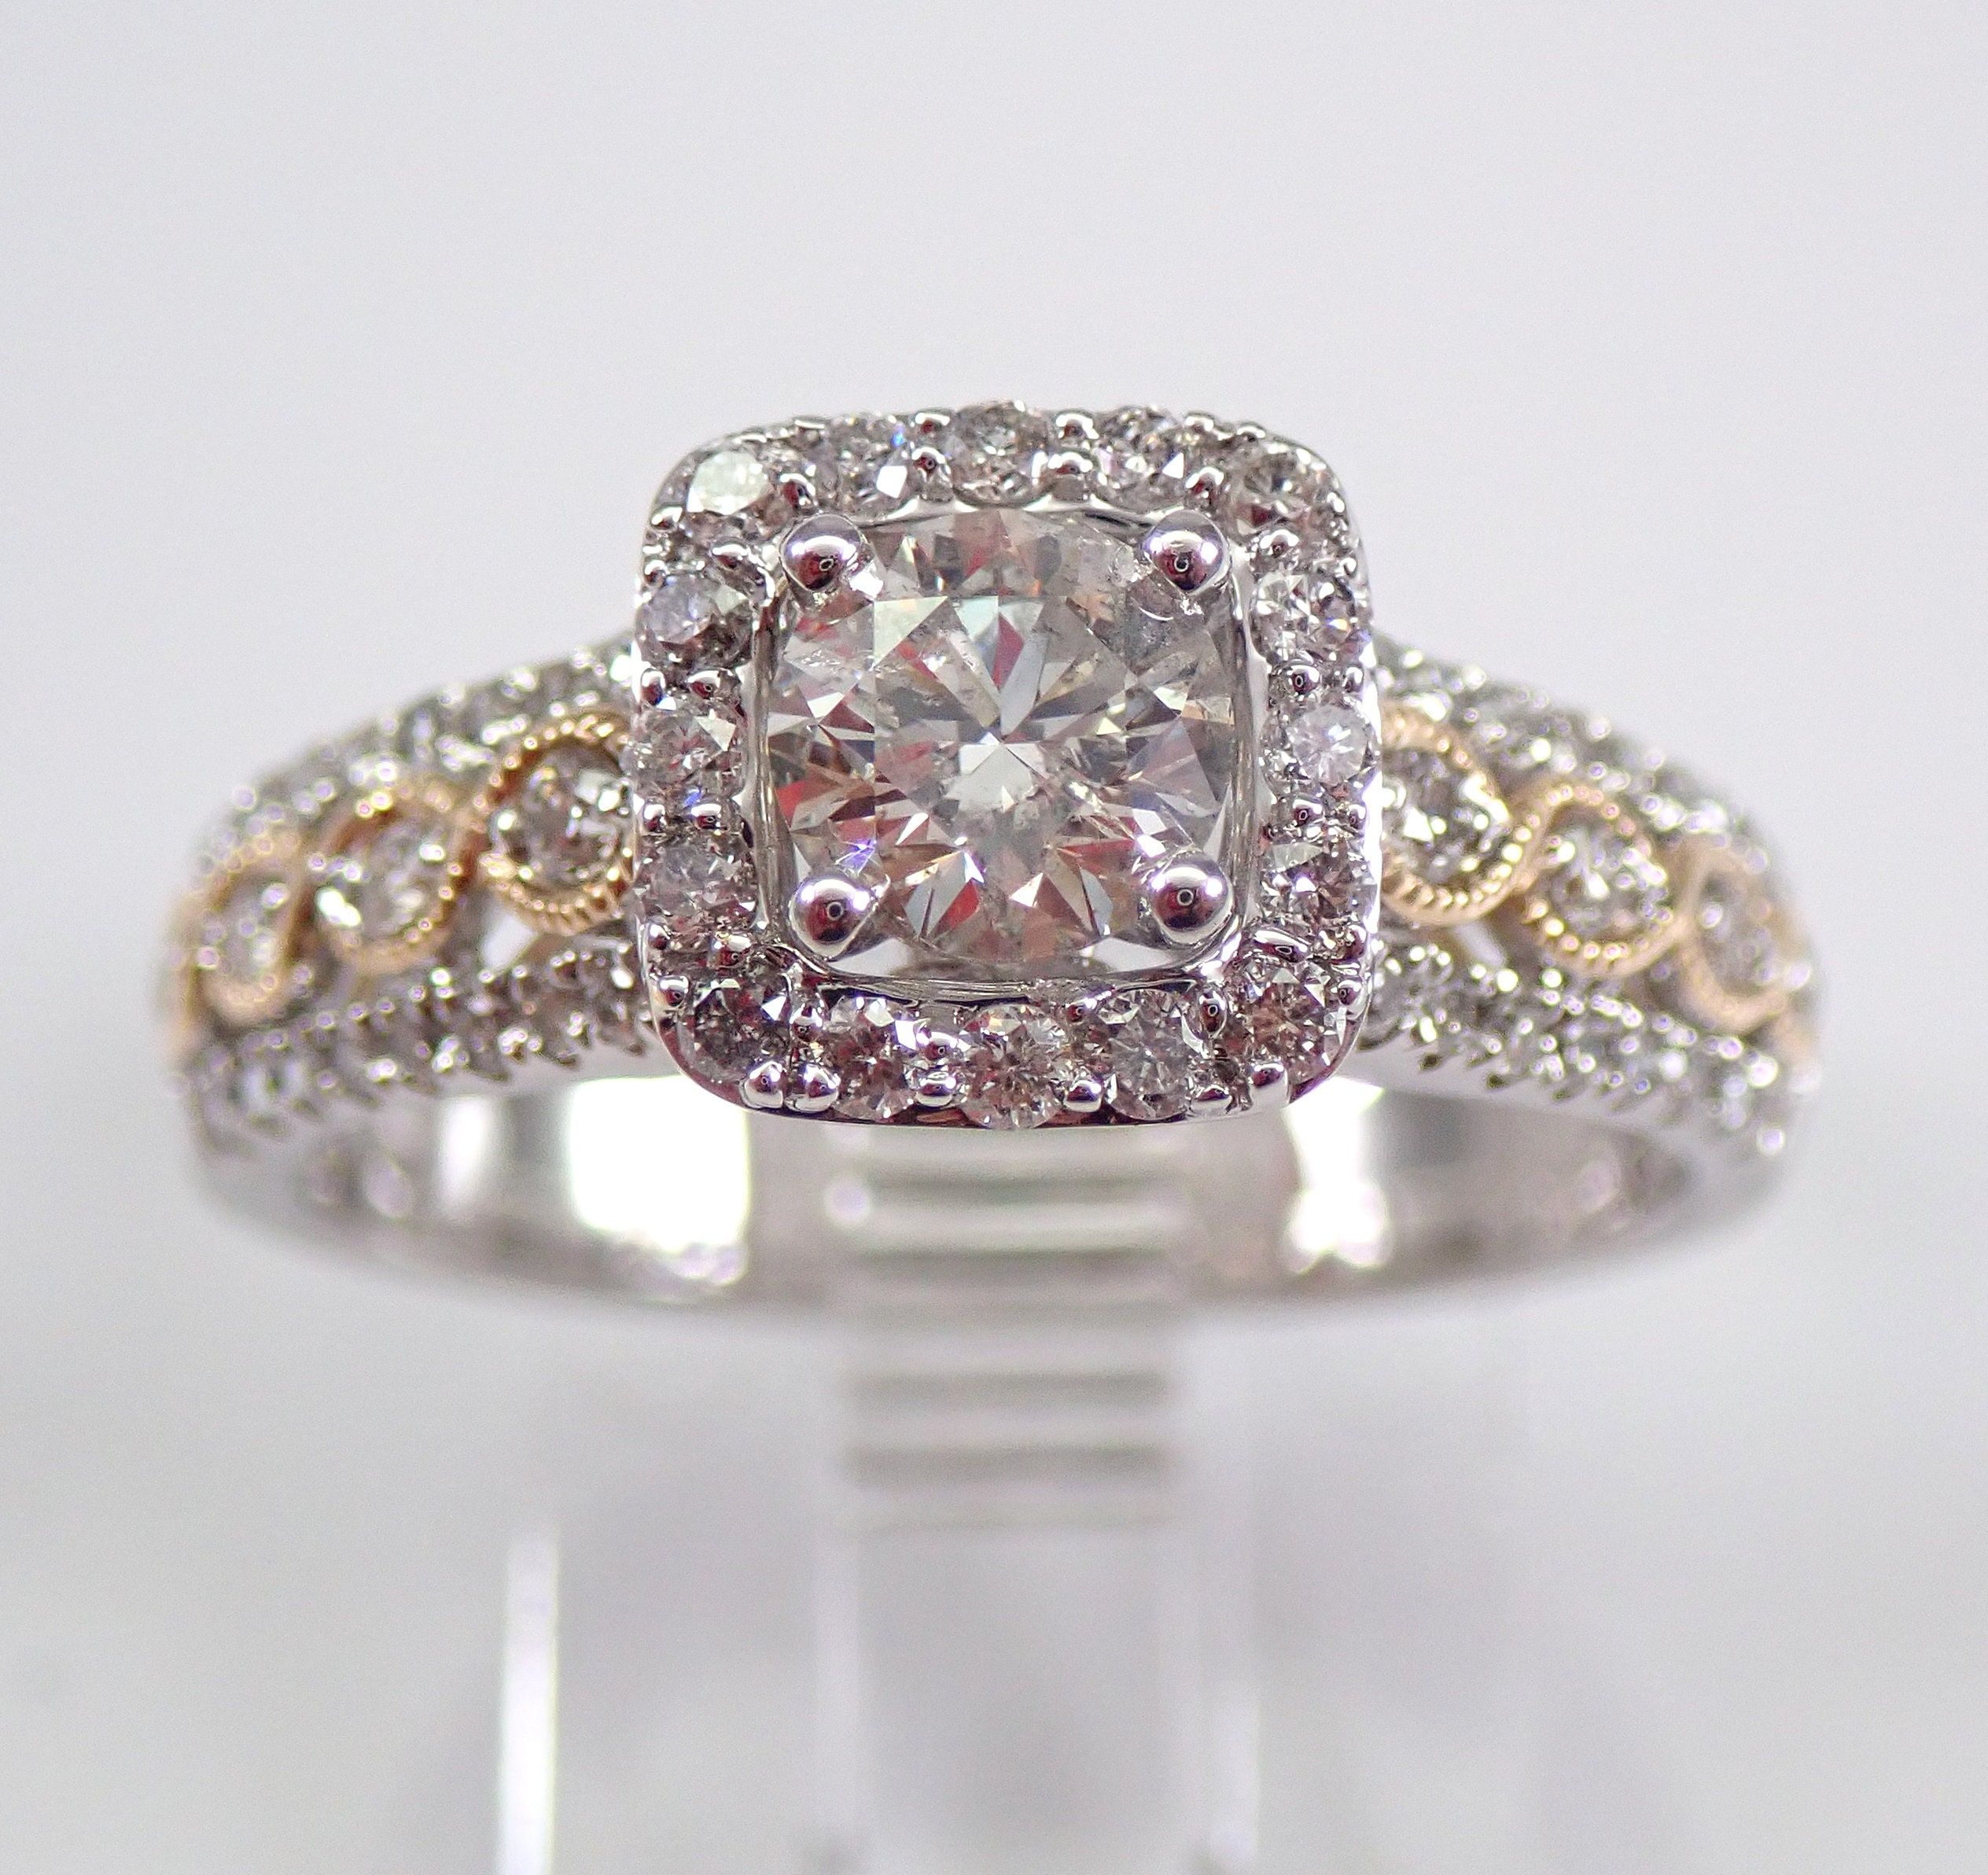 Engagement Rings Versus Wedding Rings: Do You Need Both?